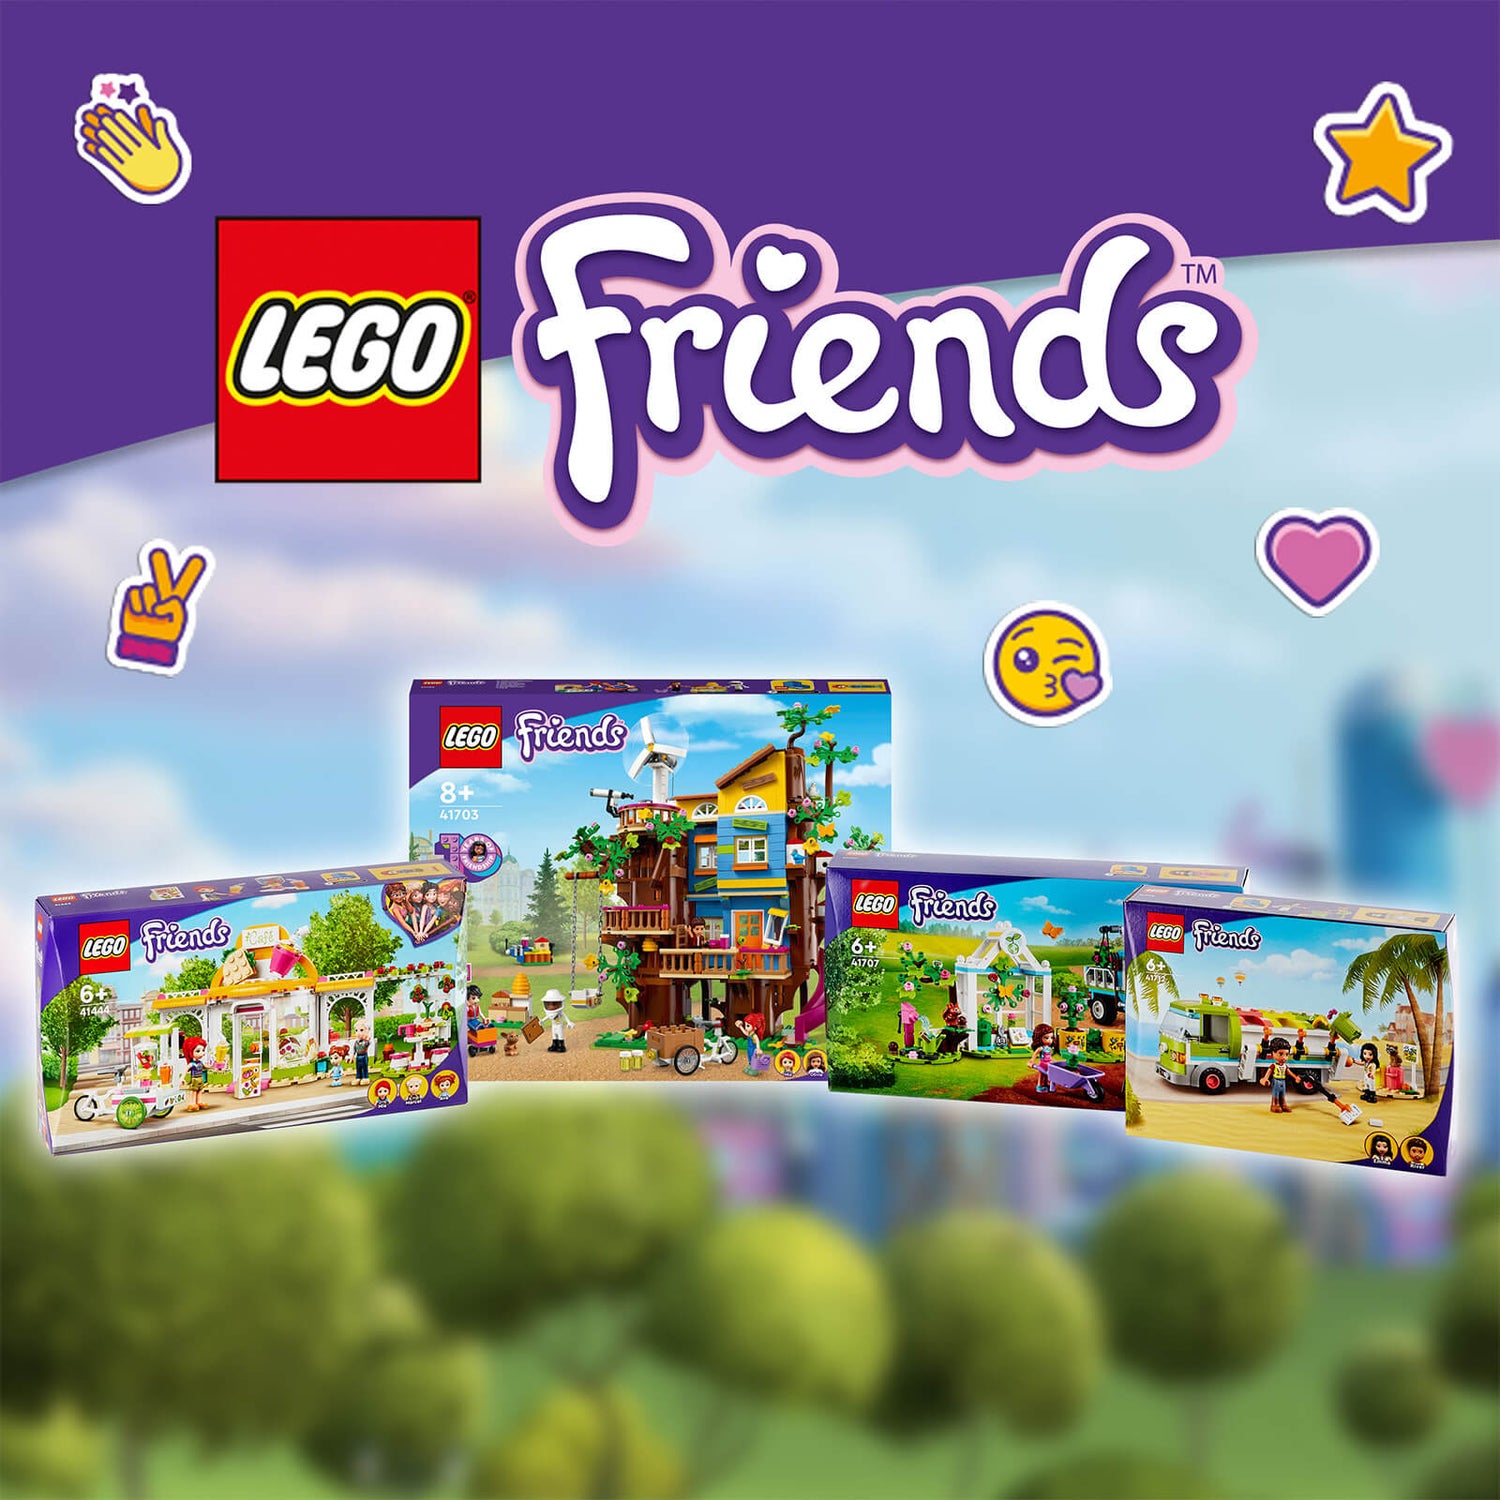 LEGO Friends: Sustainable Treehouse Living Kit For Kids Toys – Value Saving Bundle Gift Set